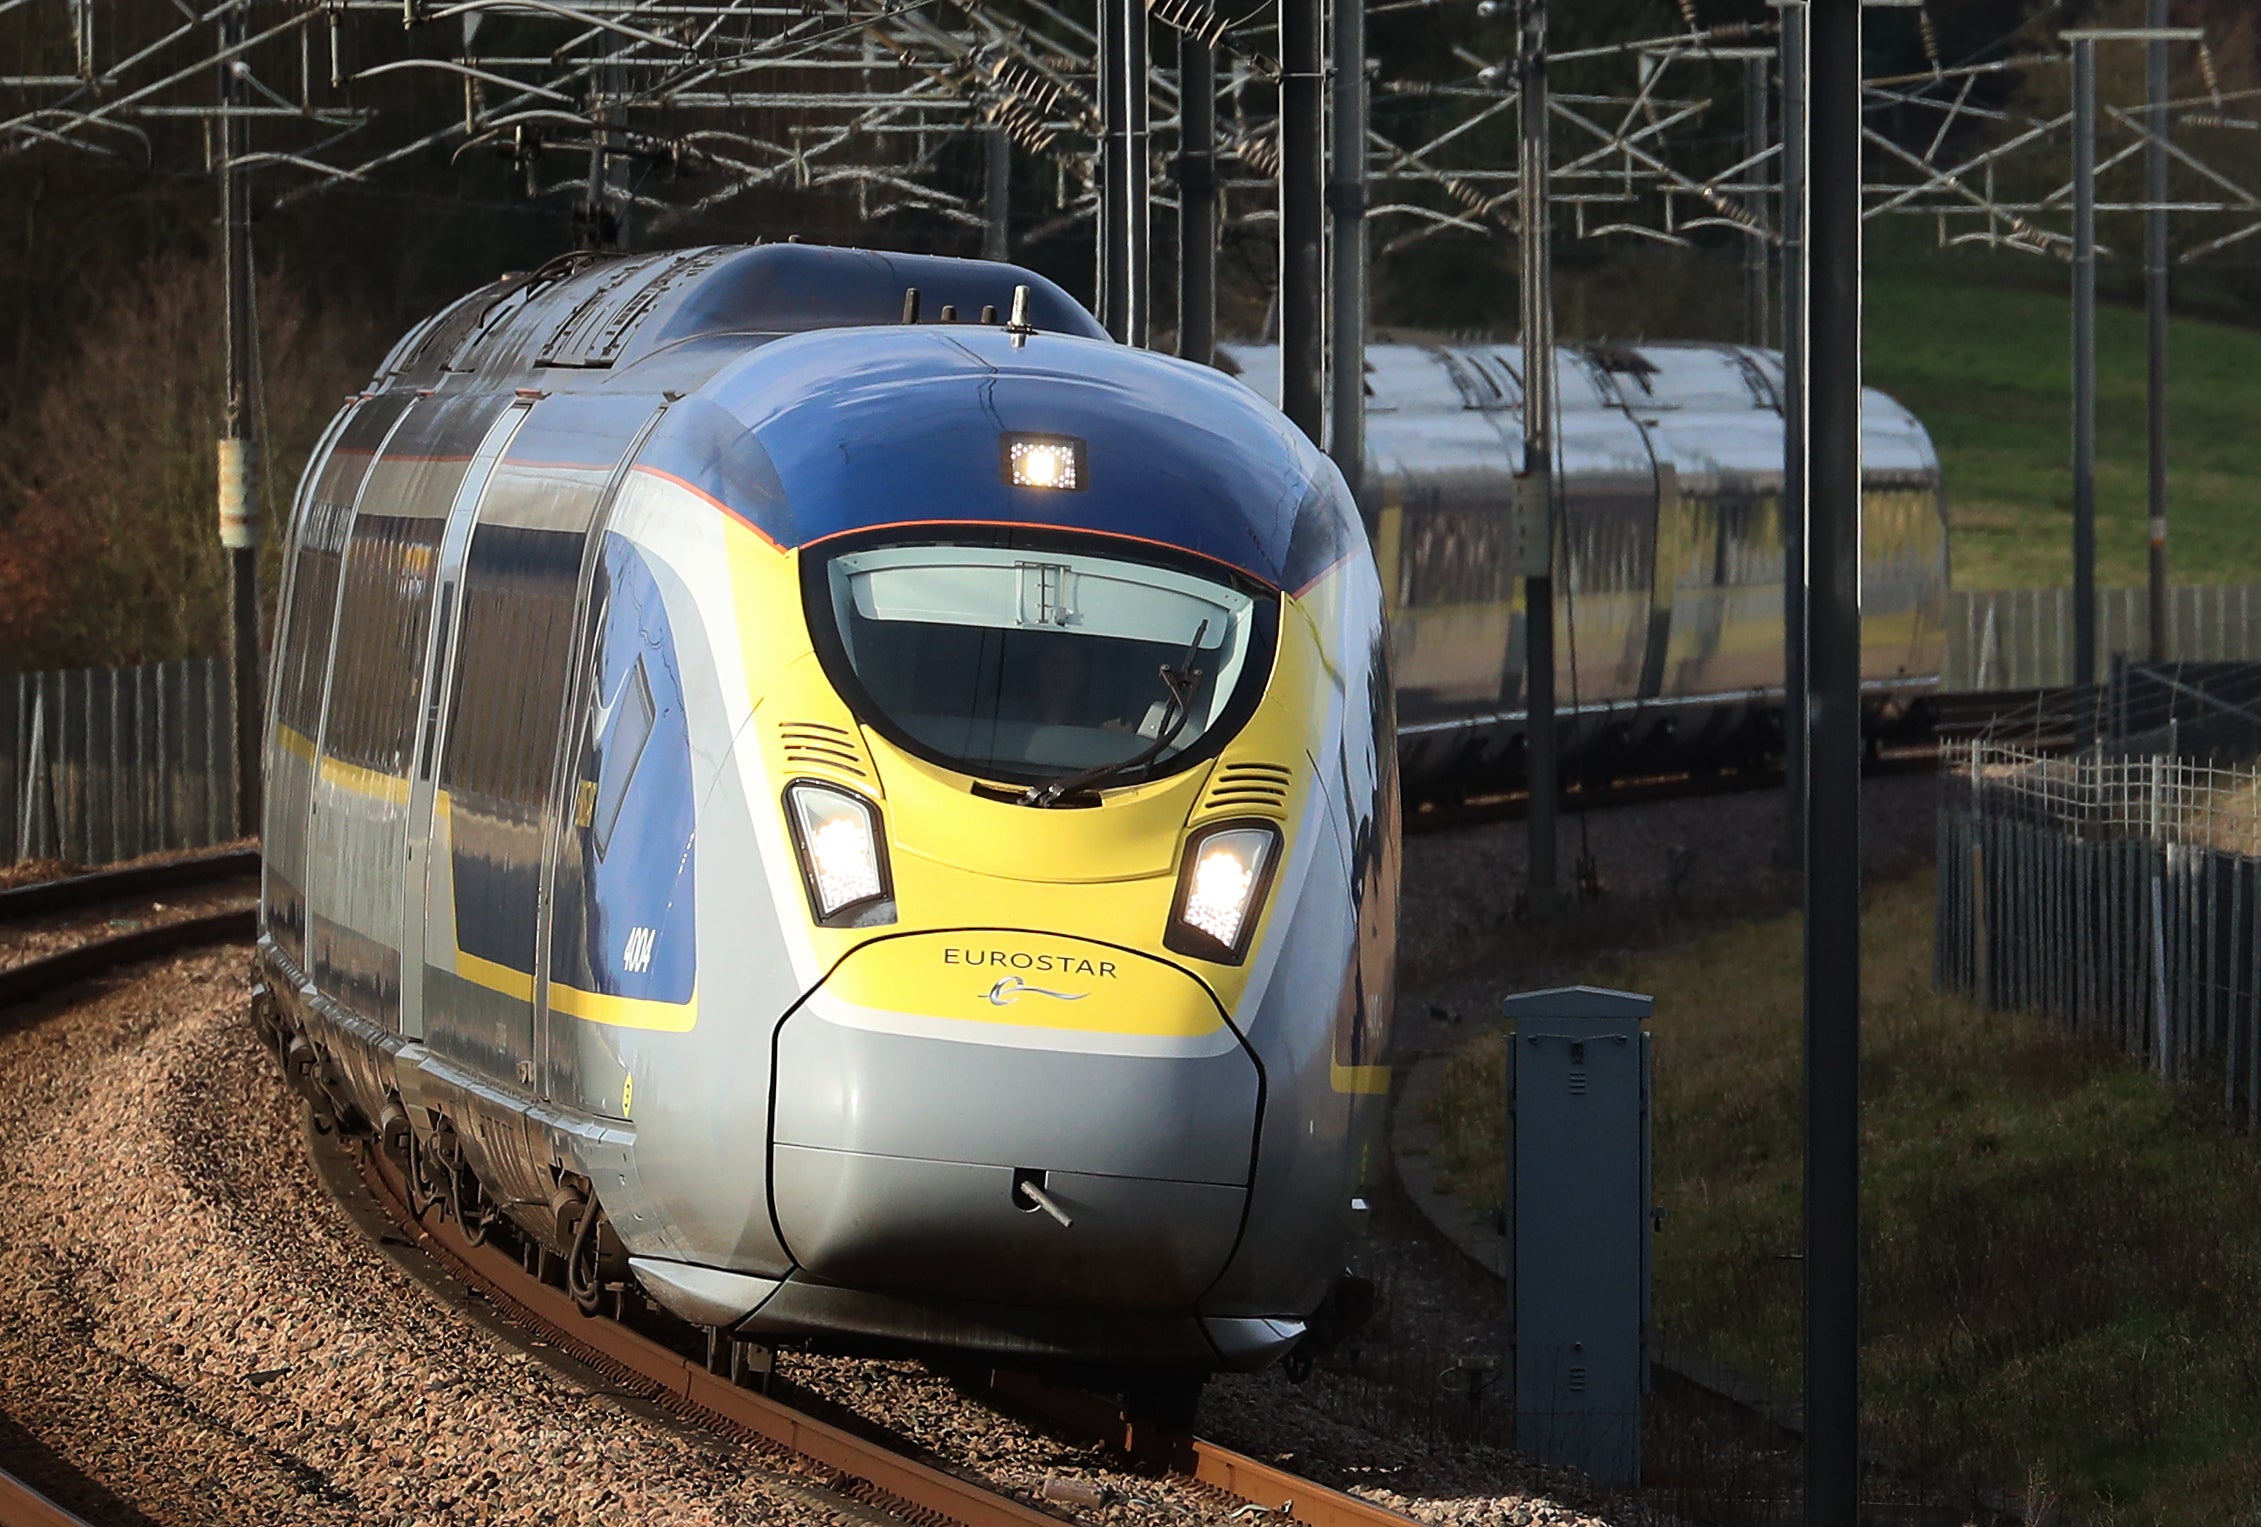 Eurostar has had trains to Amsterdam since autumn 2020